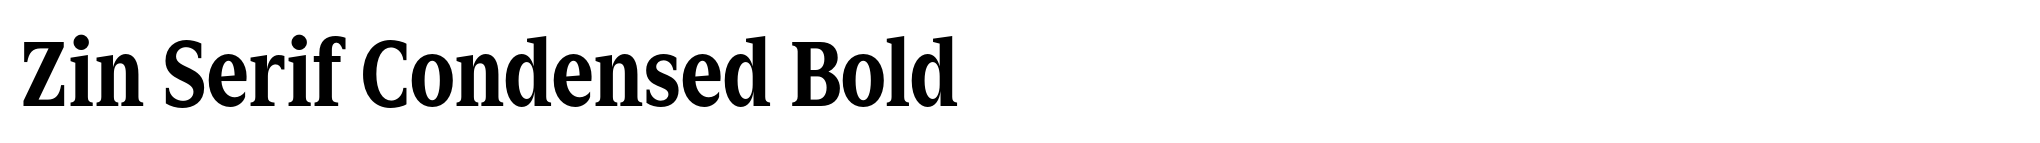 Zin Serif Condensed Bold image